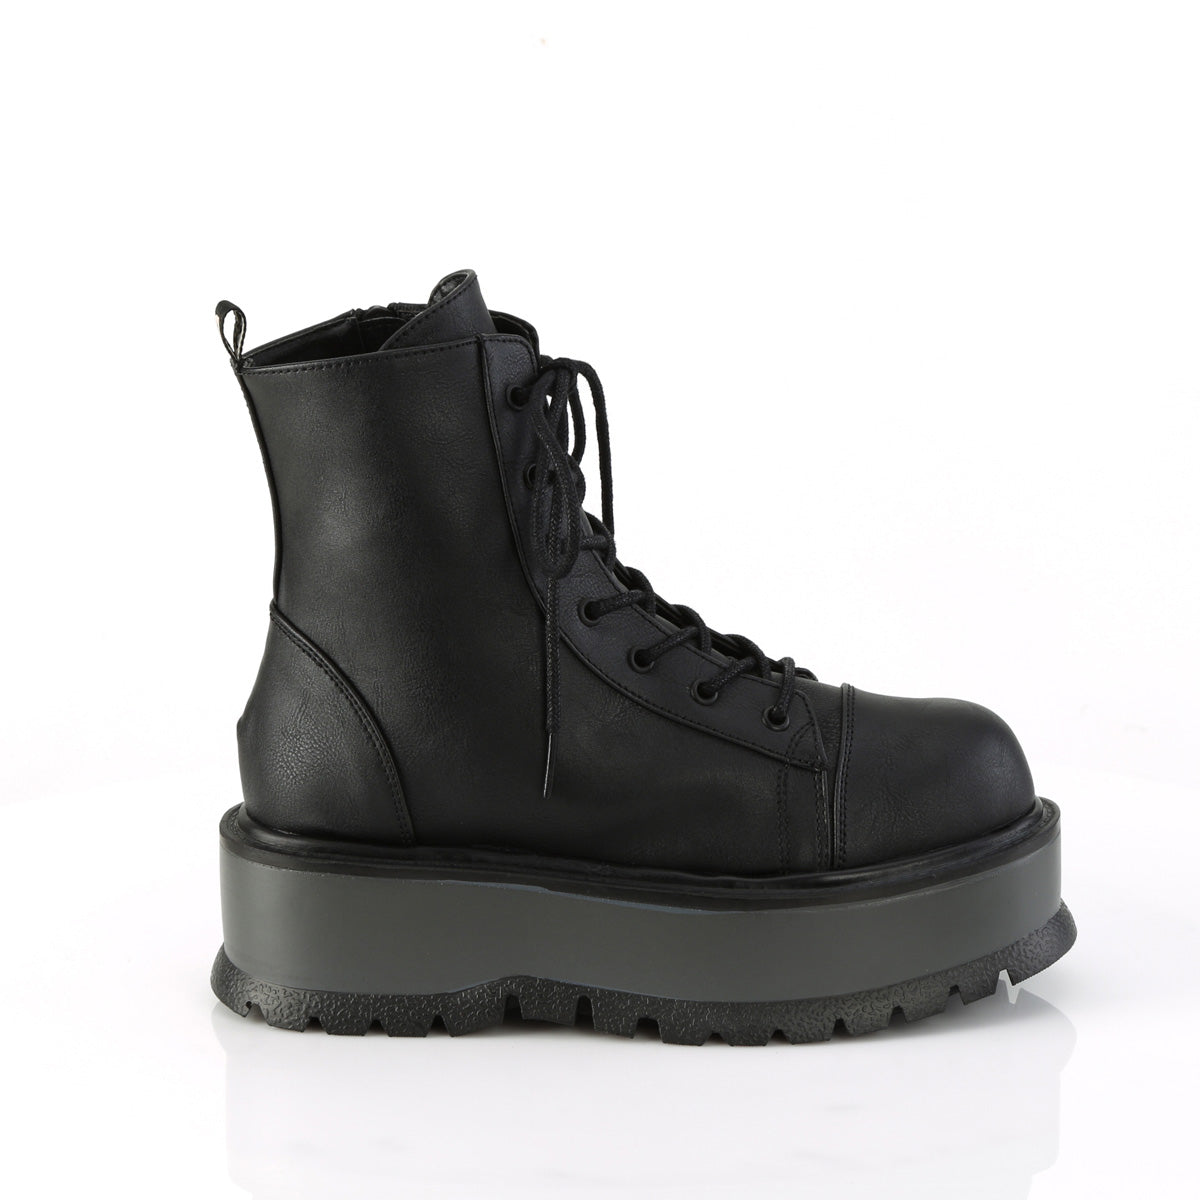 SLACKER-55 - Black Vegan Leather Boots